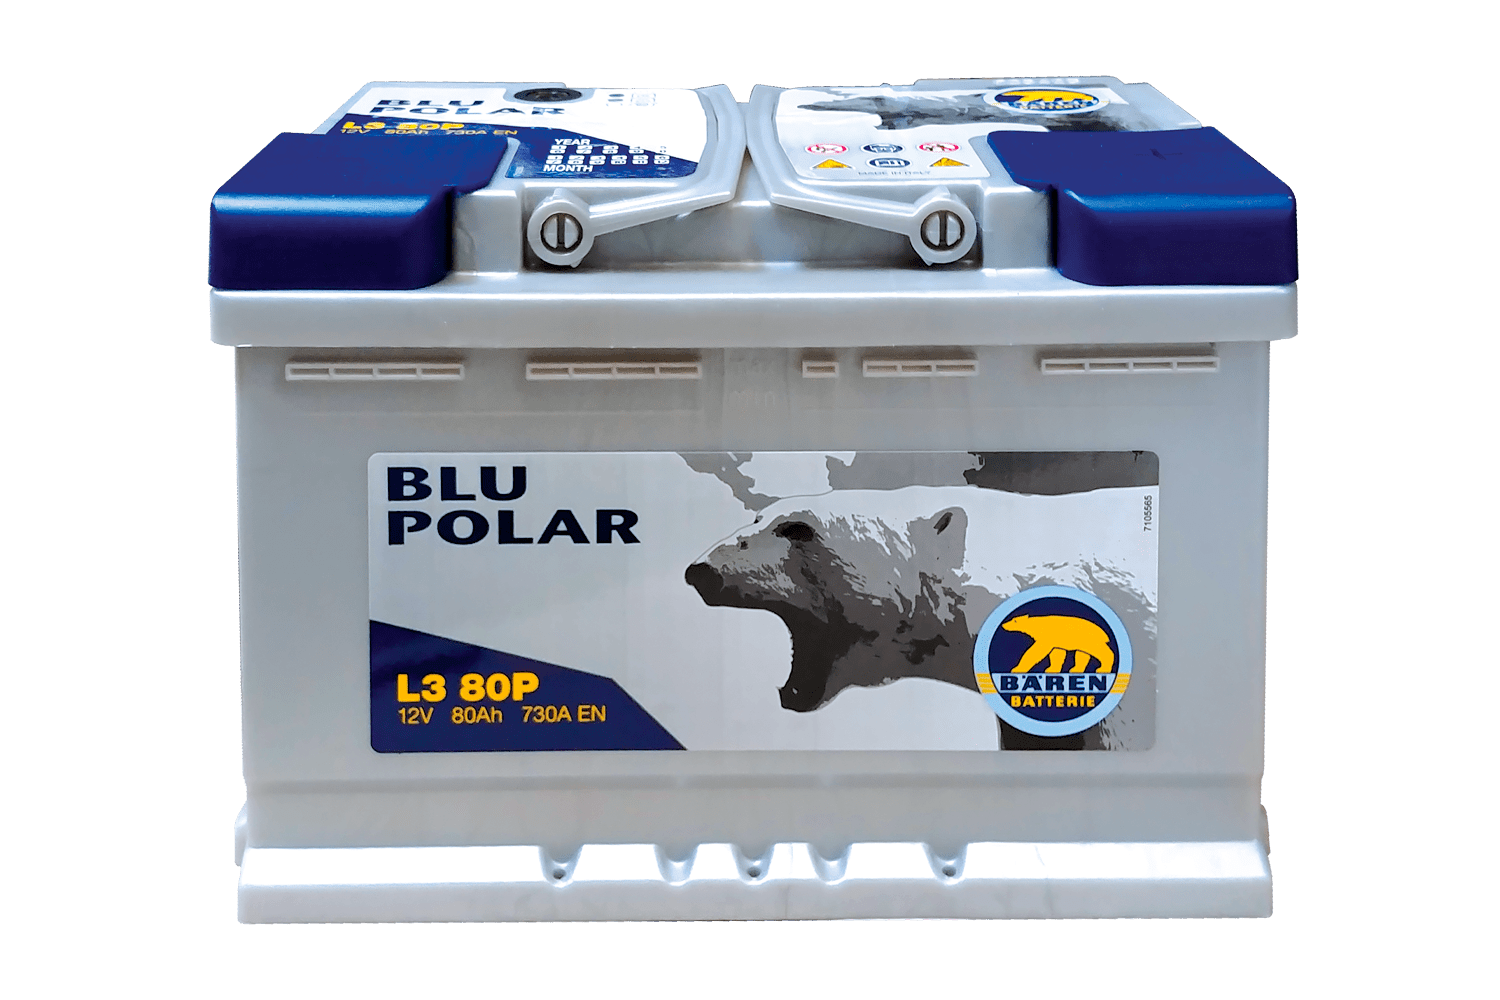 Bären Blu Polar 12V 90Ah 800A/EN L5 90P Autobatterie Bären. TecDoc: .